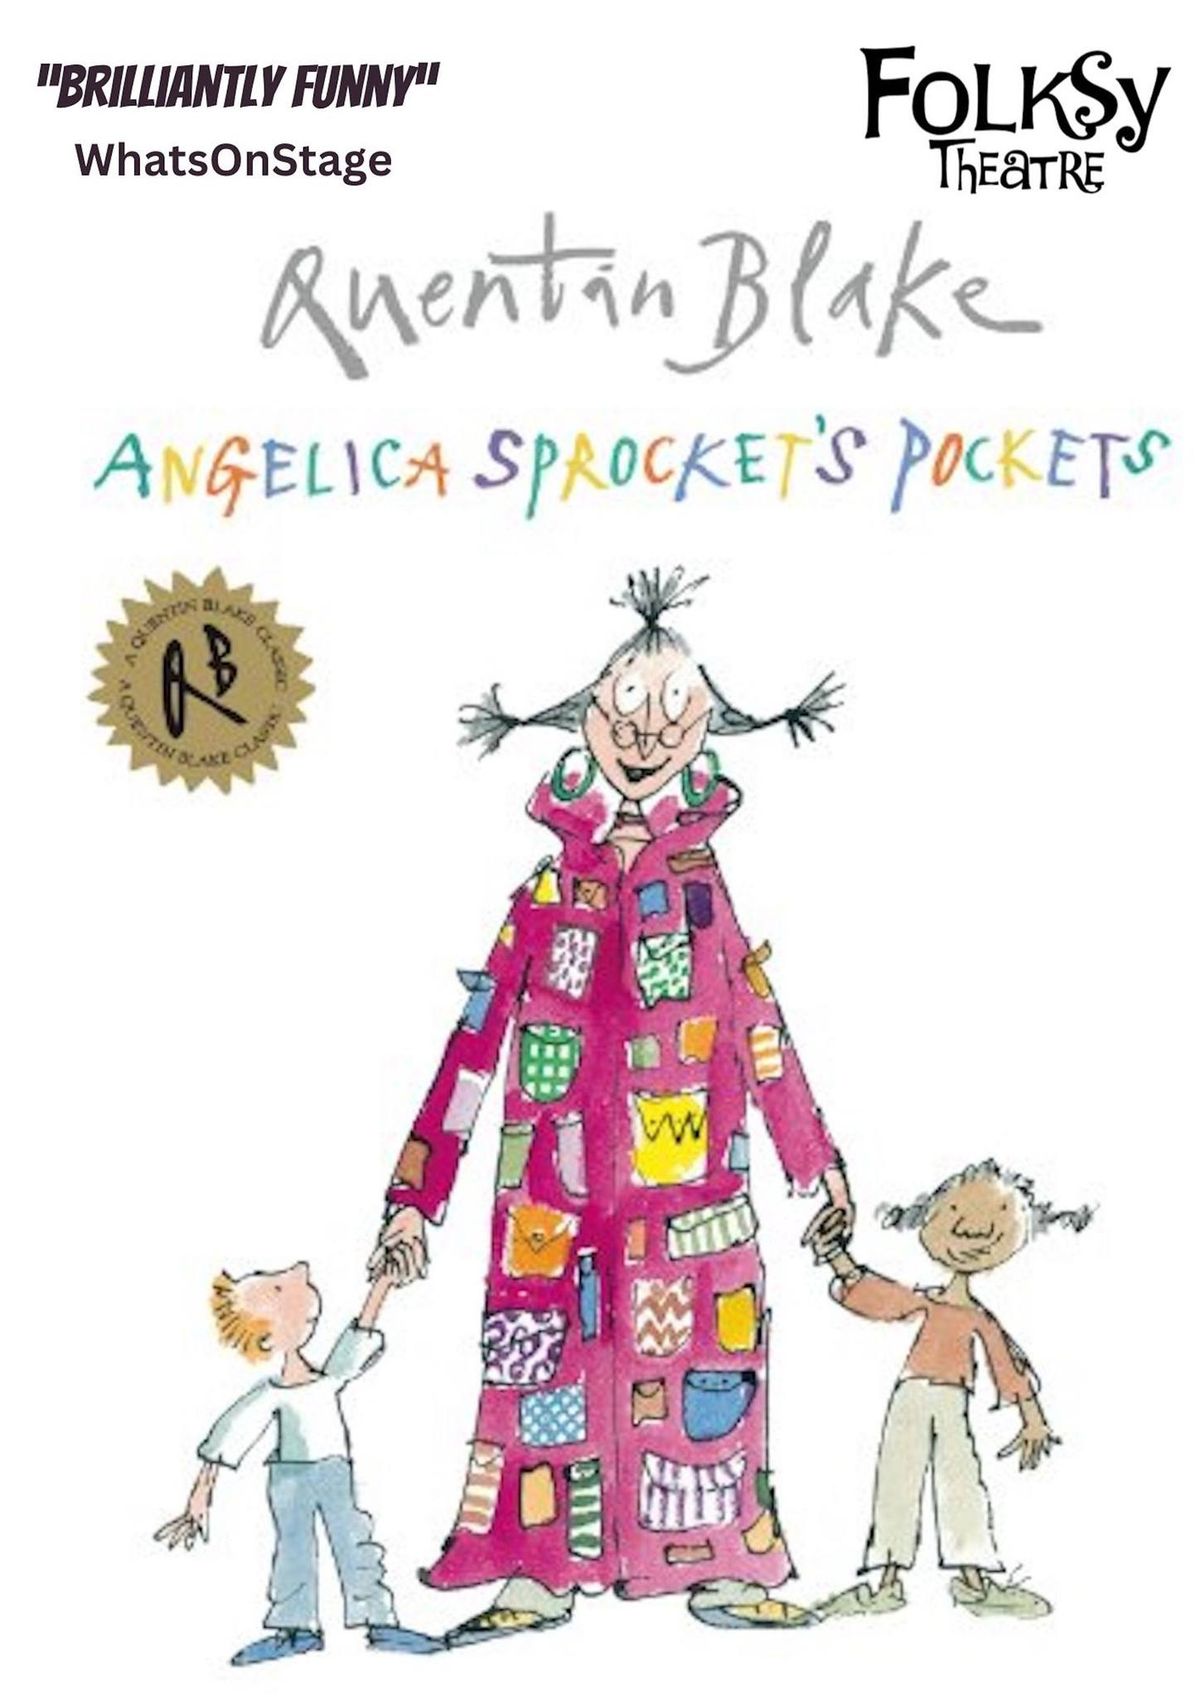 Open-air Theatre-Folksy Theatre presents 'Angelica Sprocket's Pockets' at Wightwick Manor & Gardens